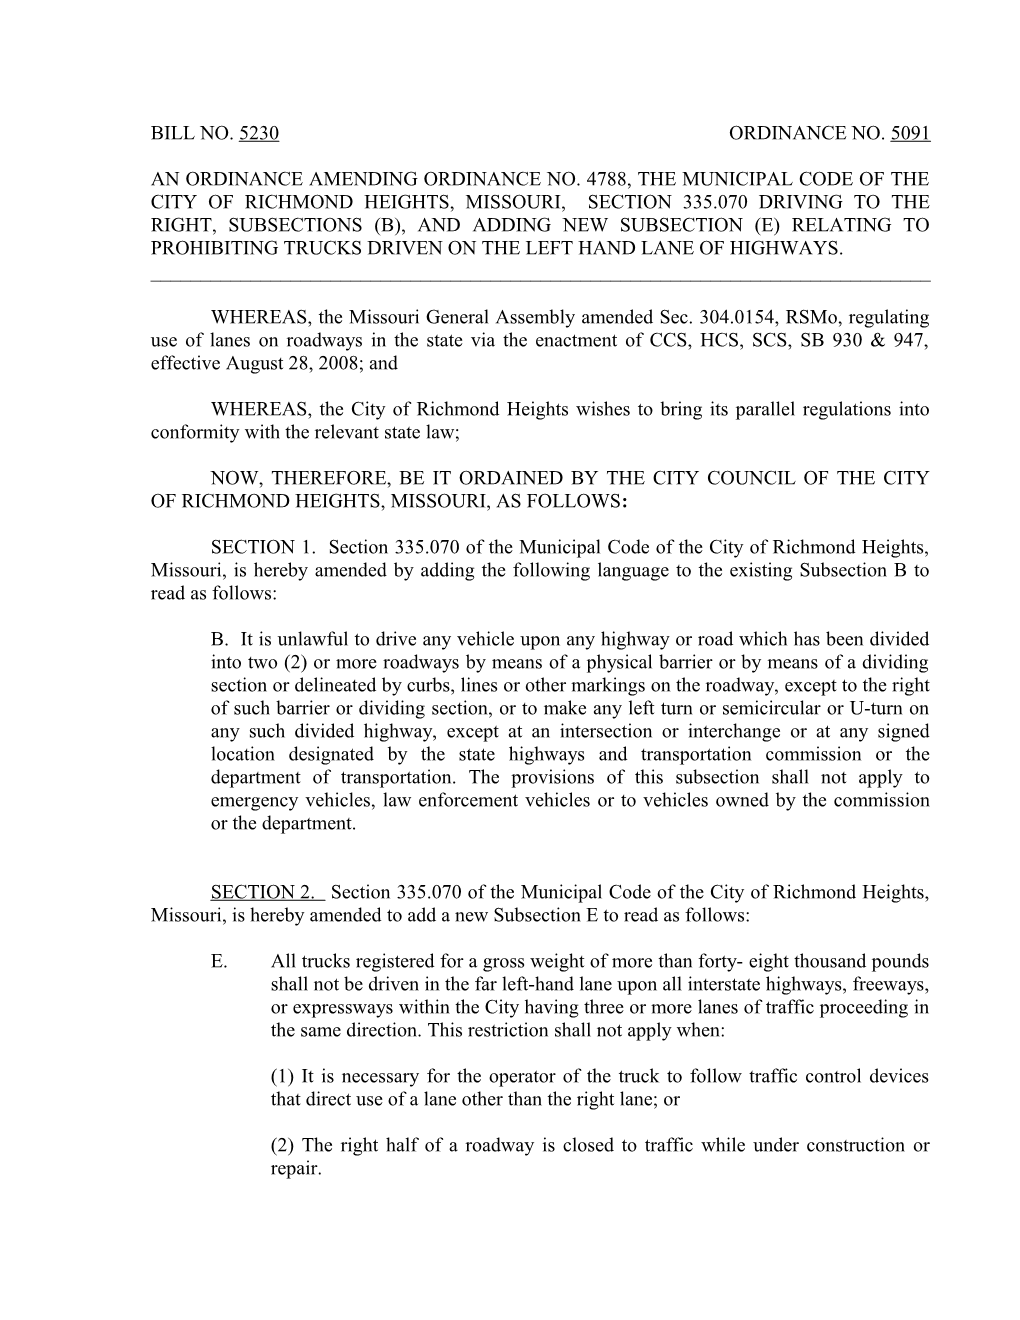 An Ordinance Amending Ordinance No. 4788, the Municipal Code of the City of Richmond Heights